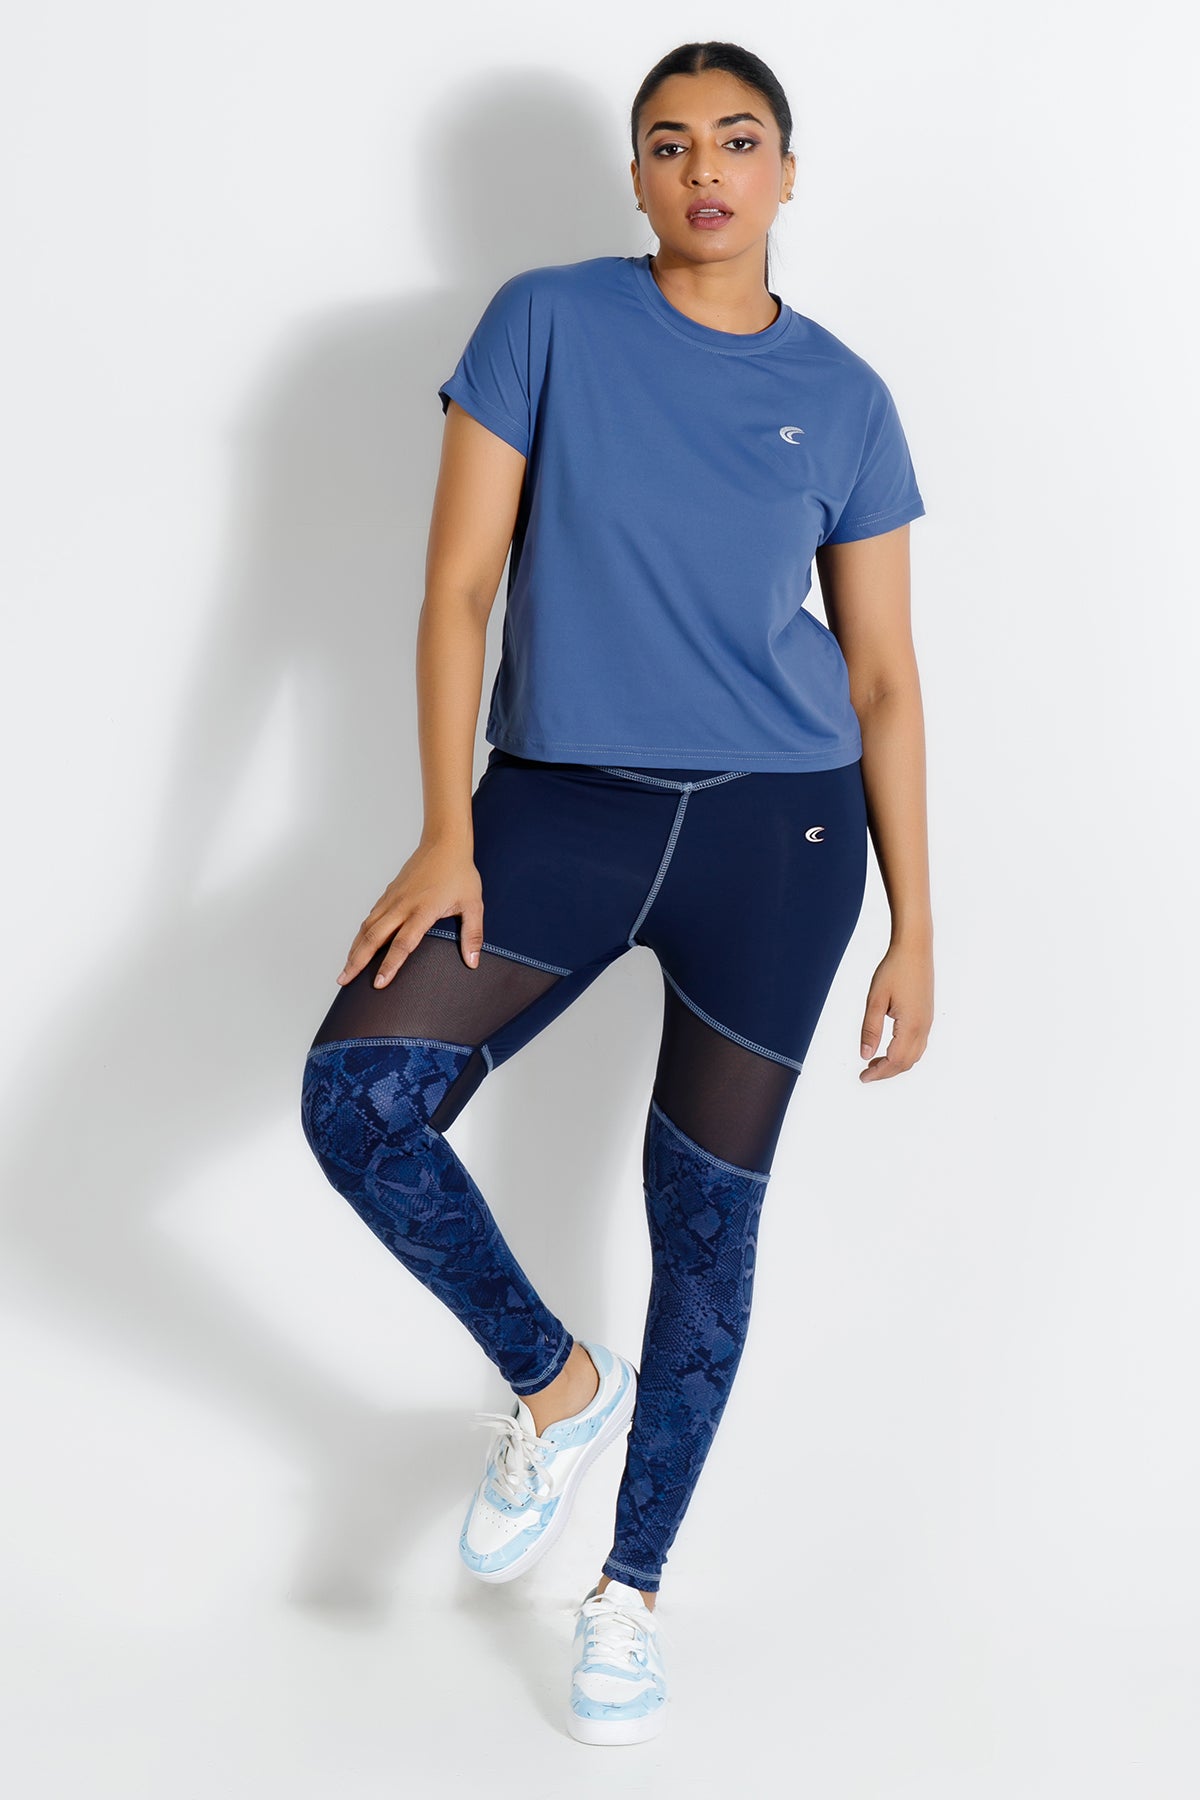 Core Basics Women's Sports Neon Effect Legging